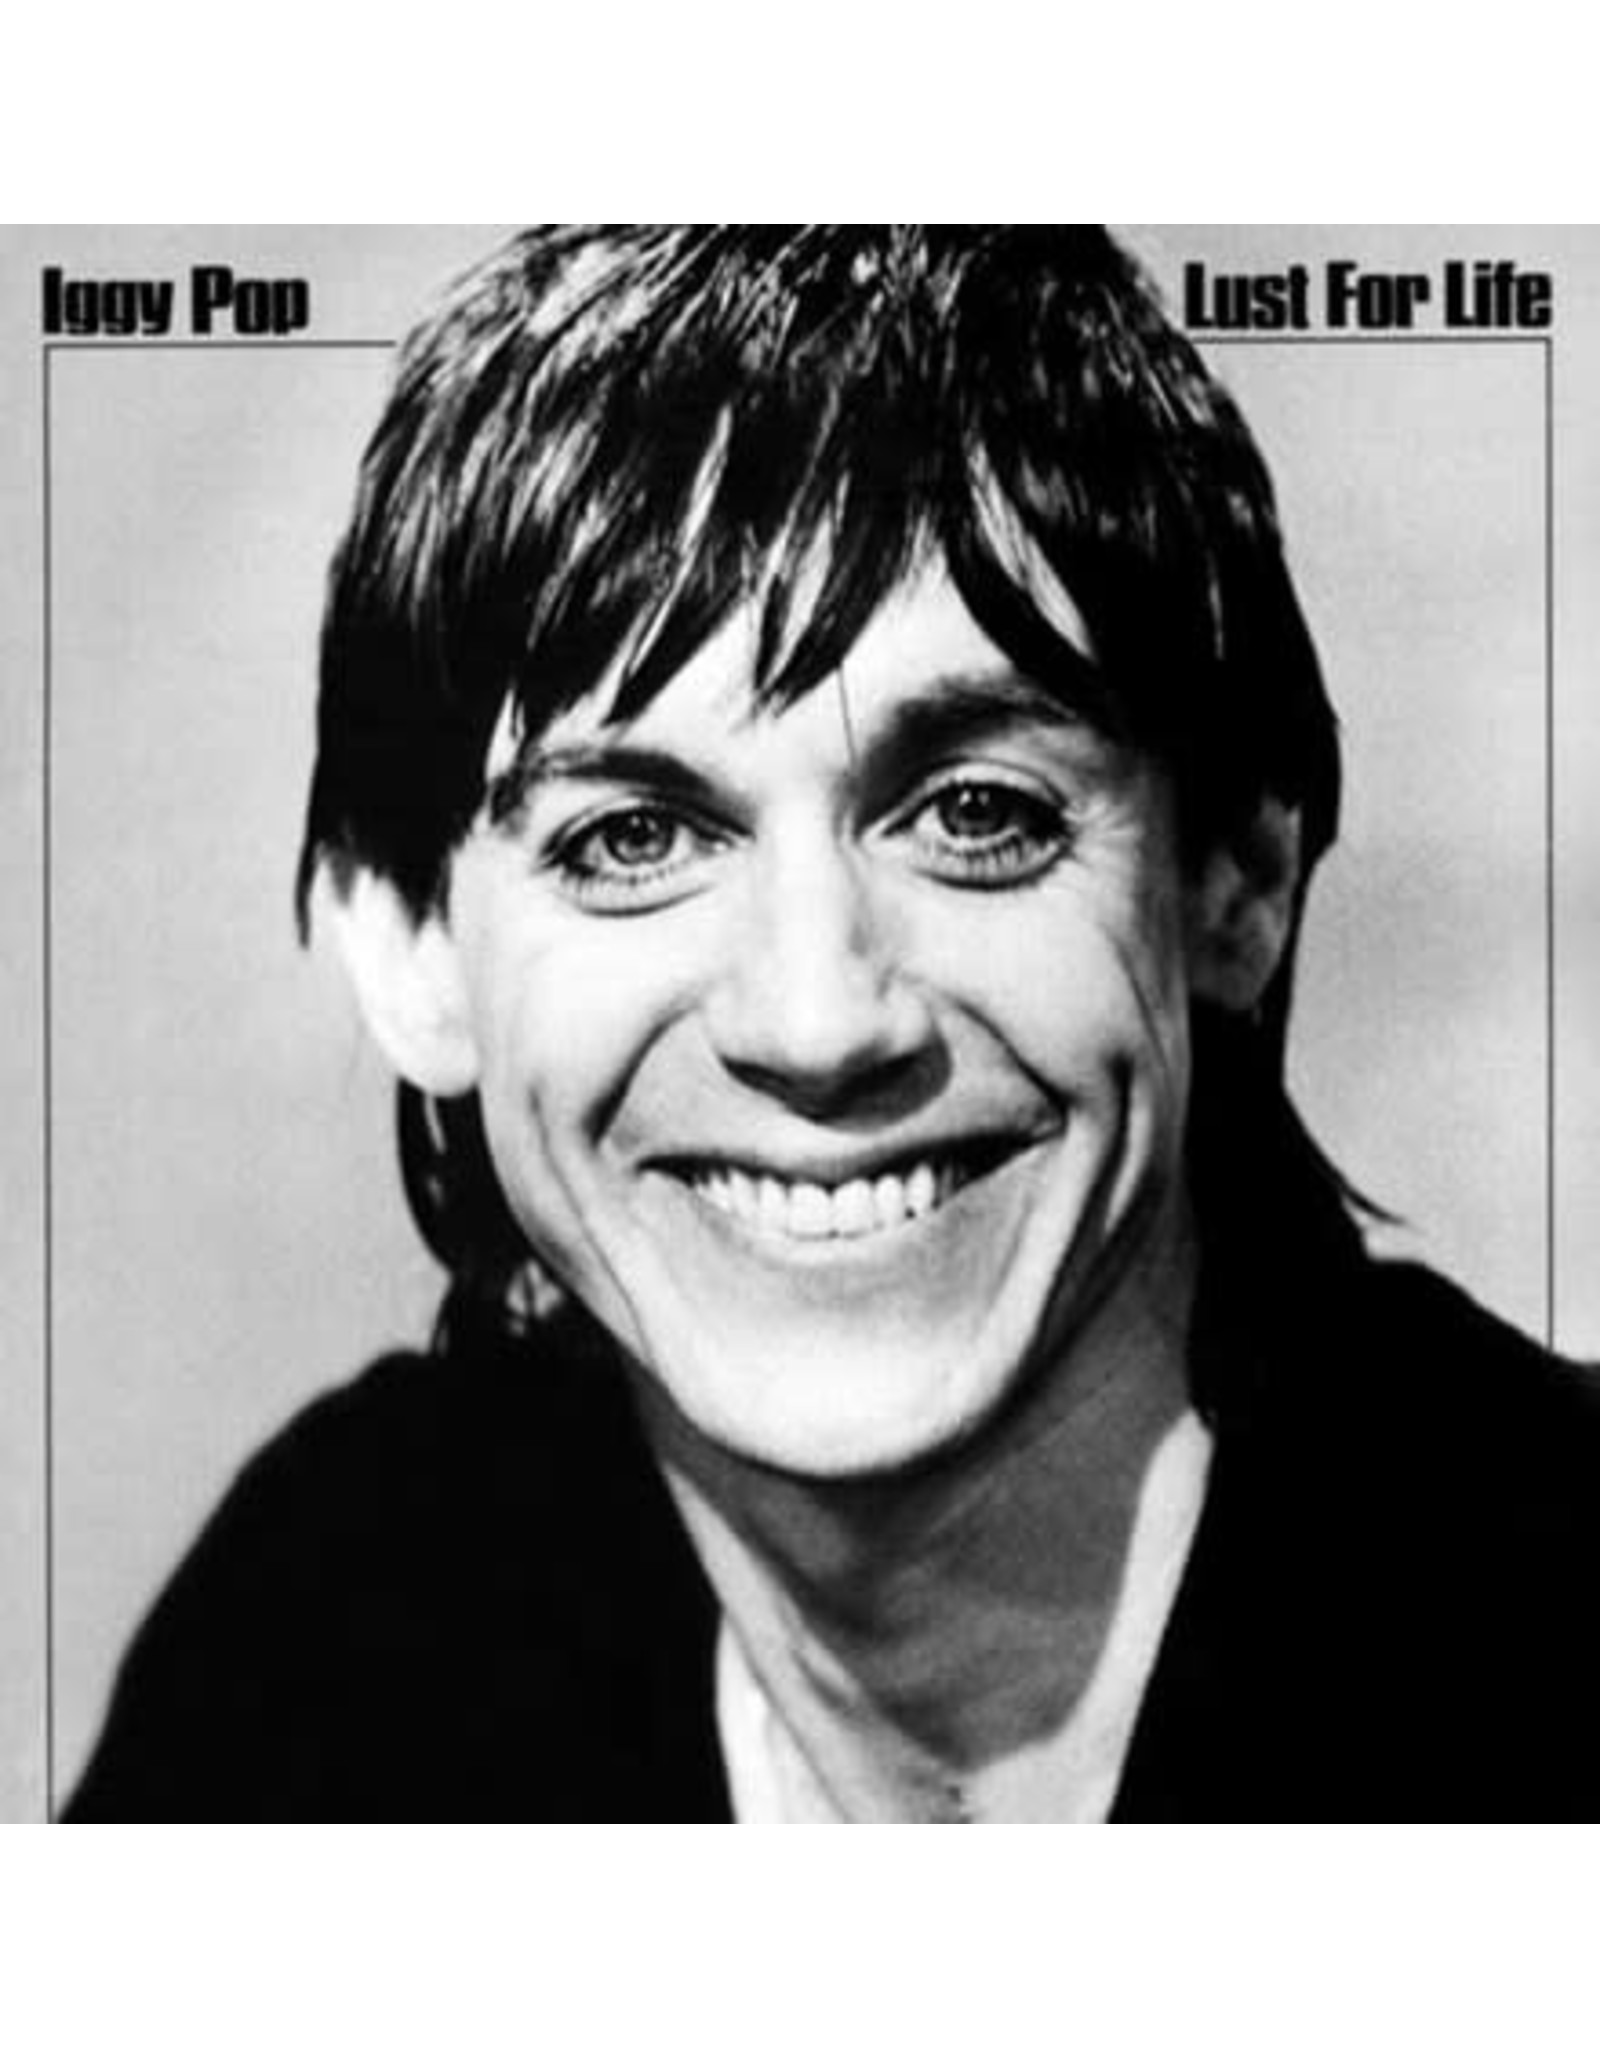 Virgin Pop, Iggy: Lust for Life LP